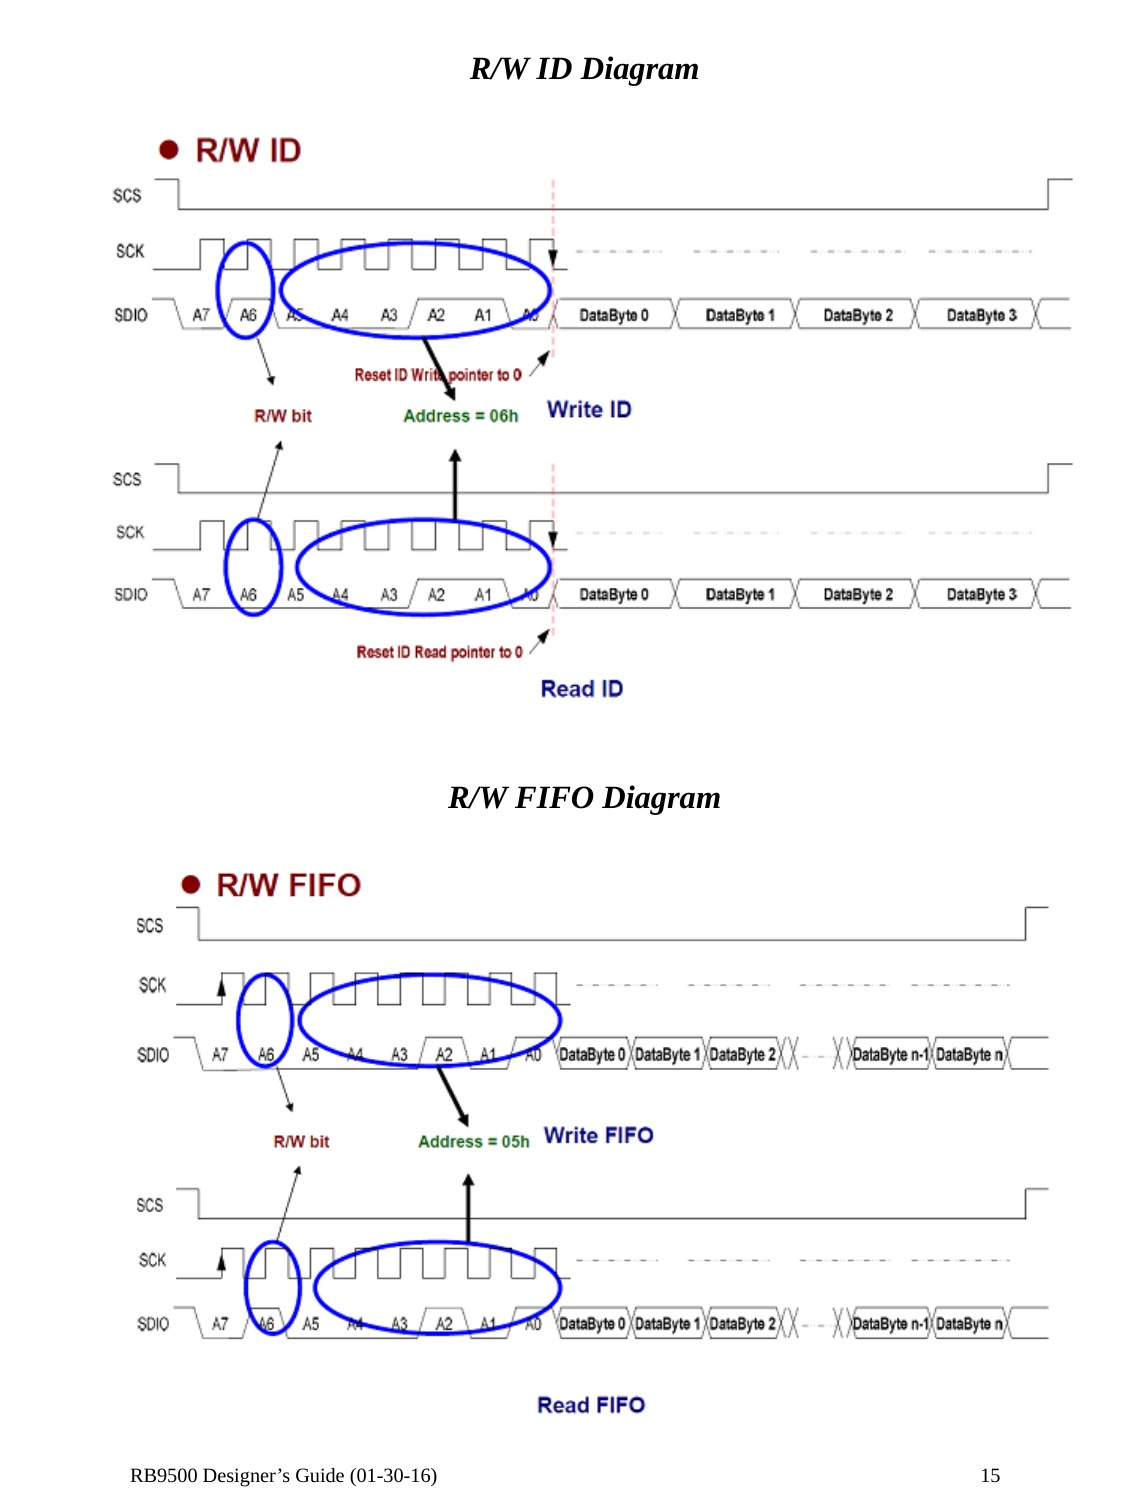  RB9500 Designer’s Guide (01-30-16)               15 R/W ID Diagram     R/W FIFO Diagram   